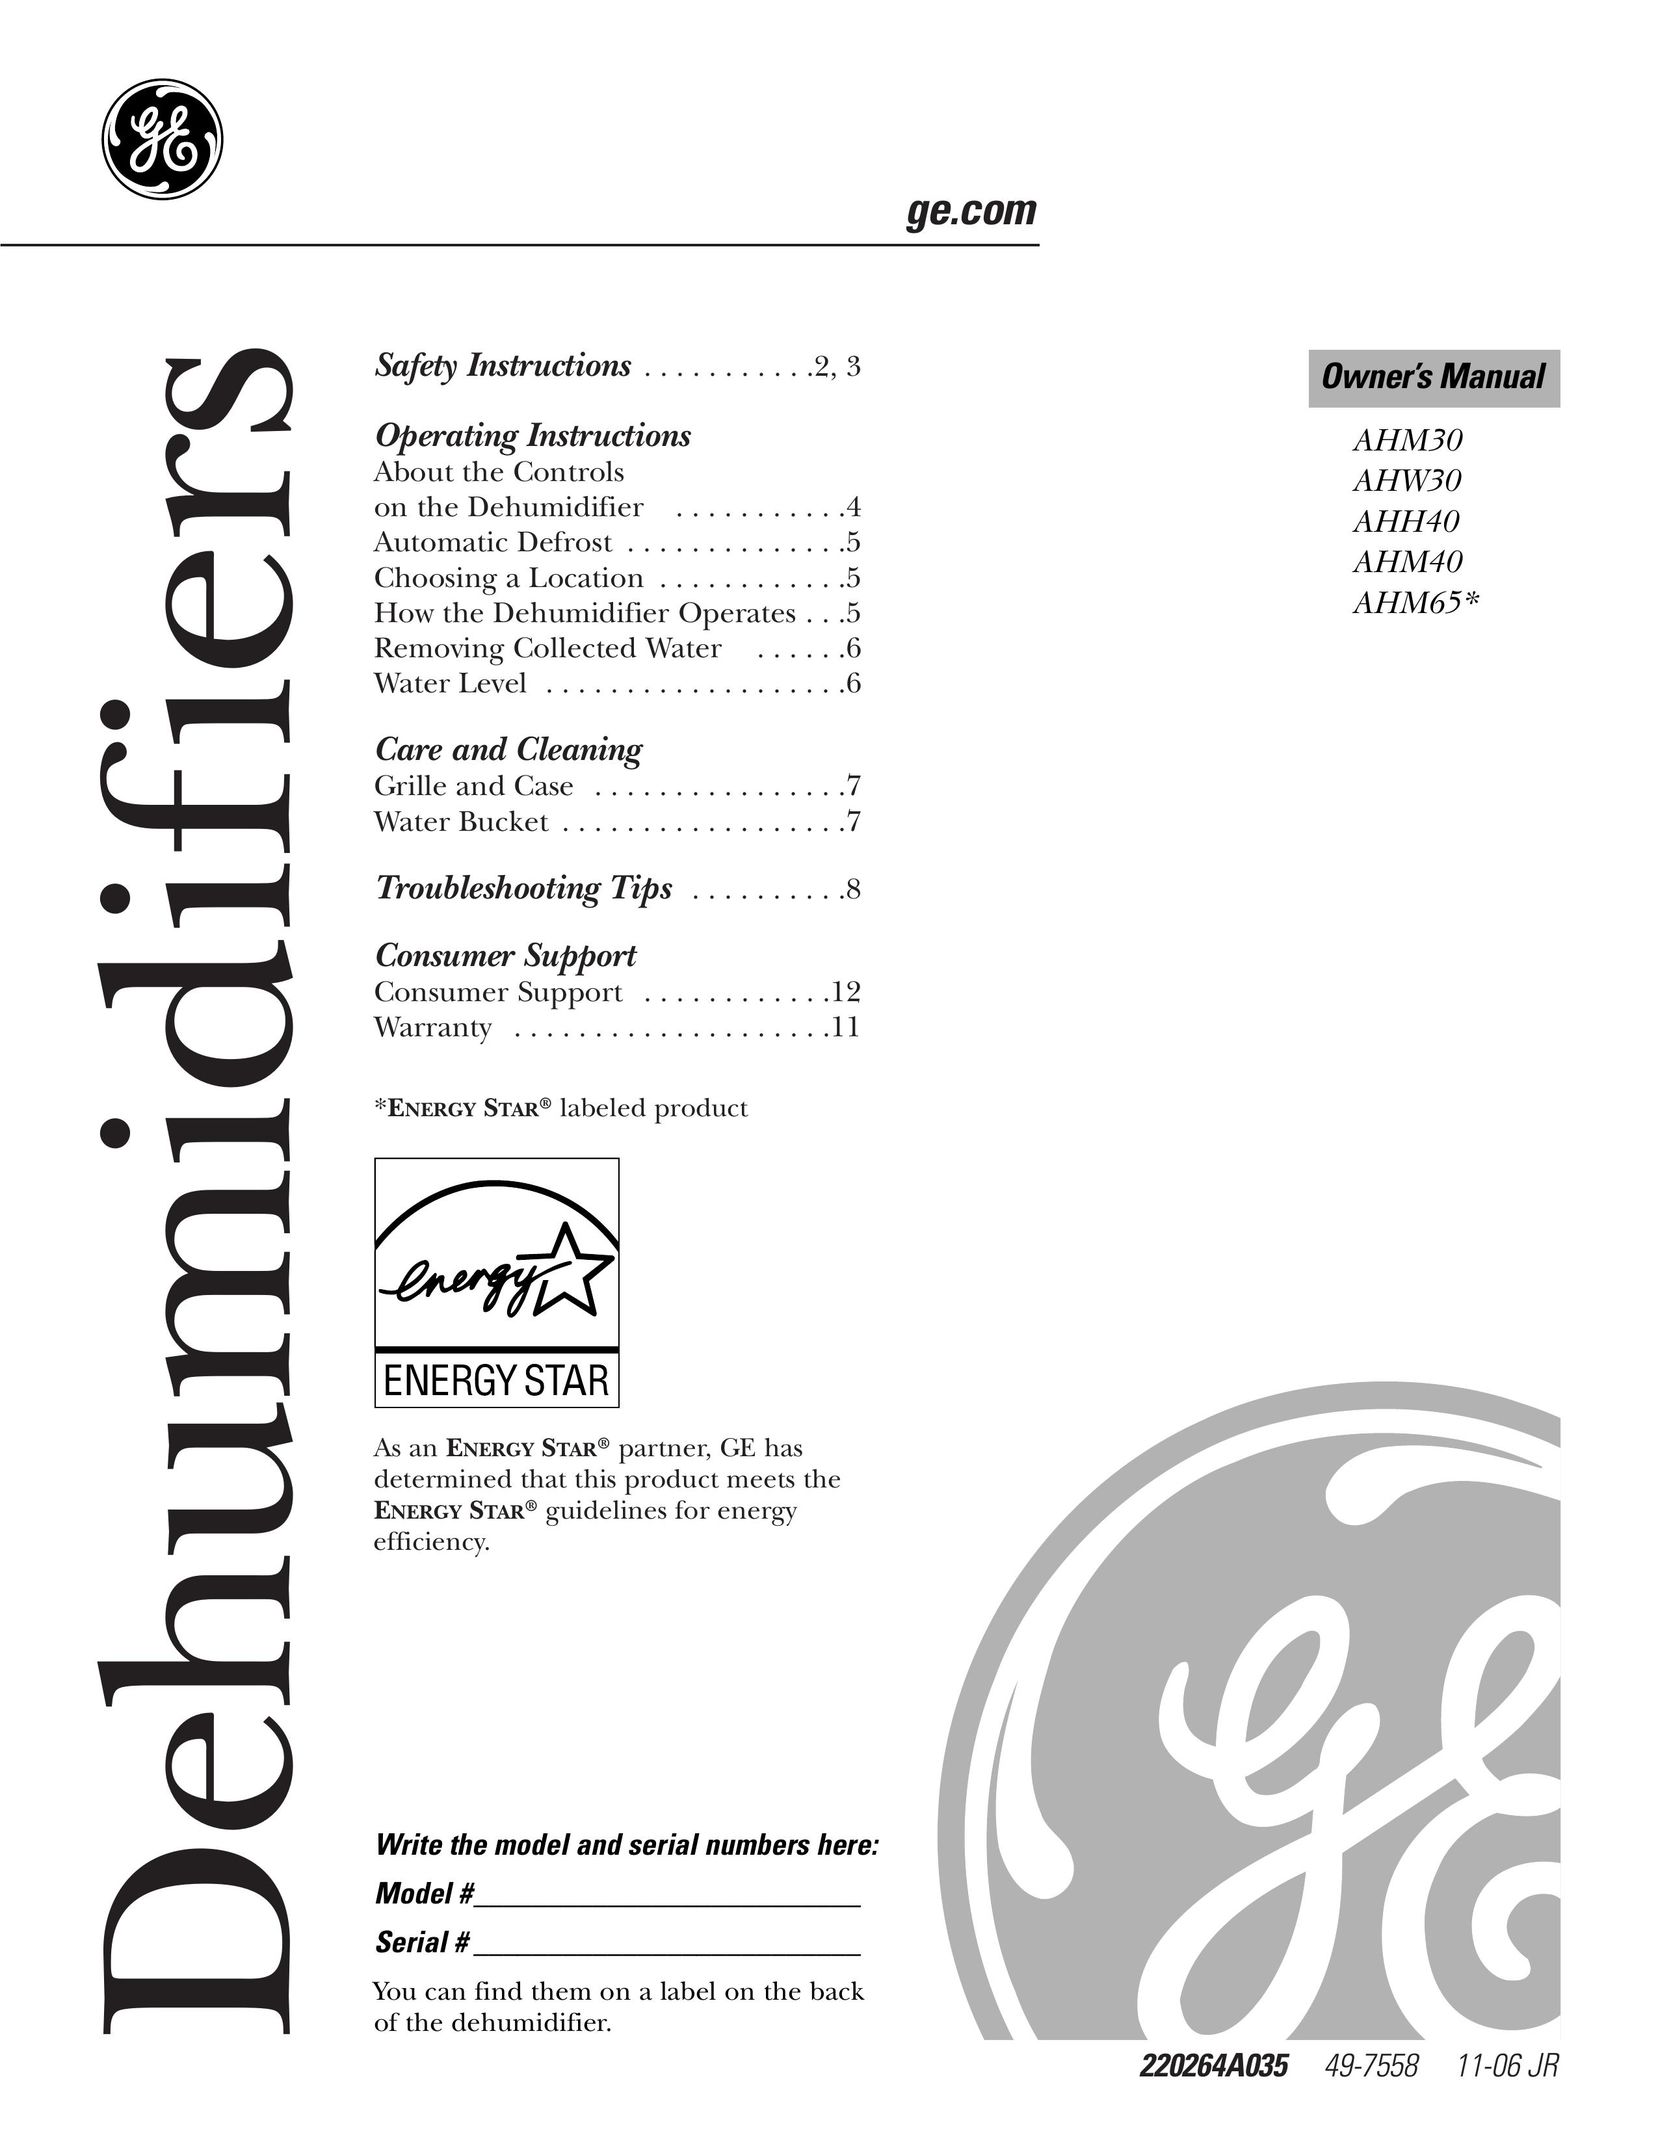 GE AHM40 Dehumidifier User Manual